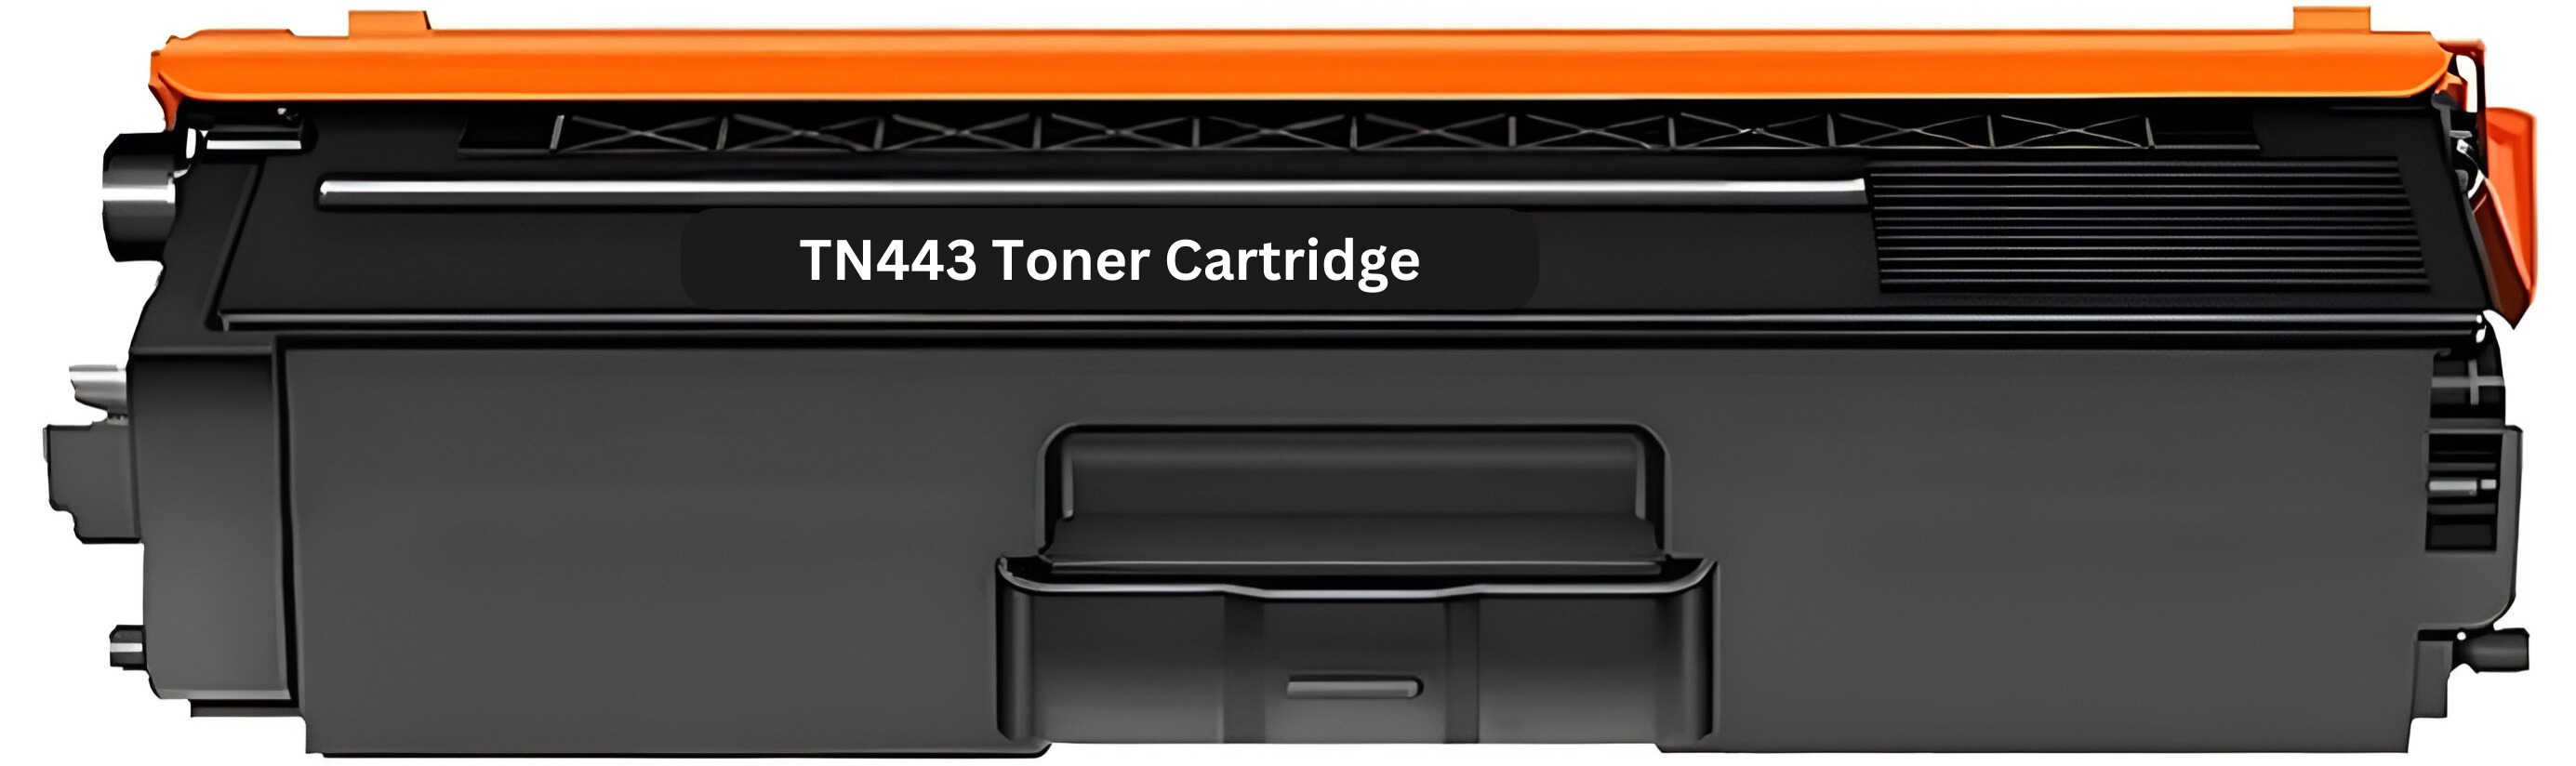 TN443BK Compatible Brother Black Toner